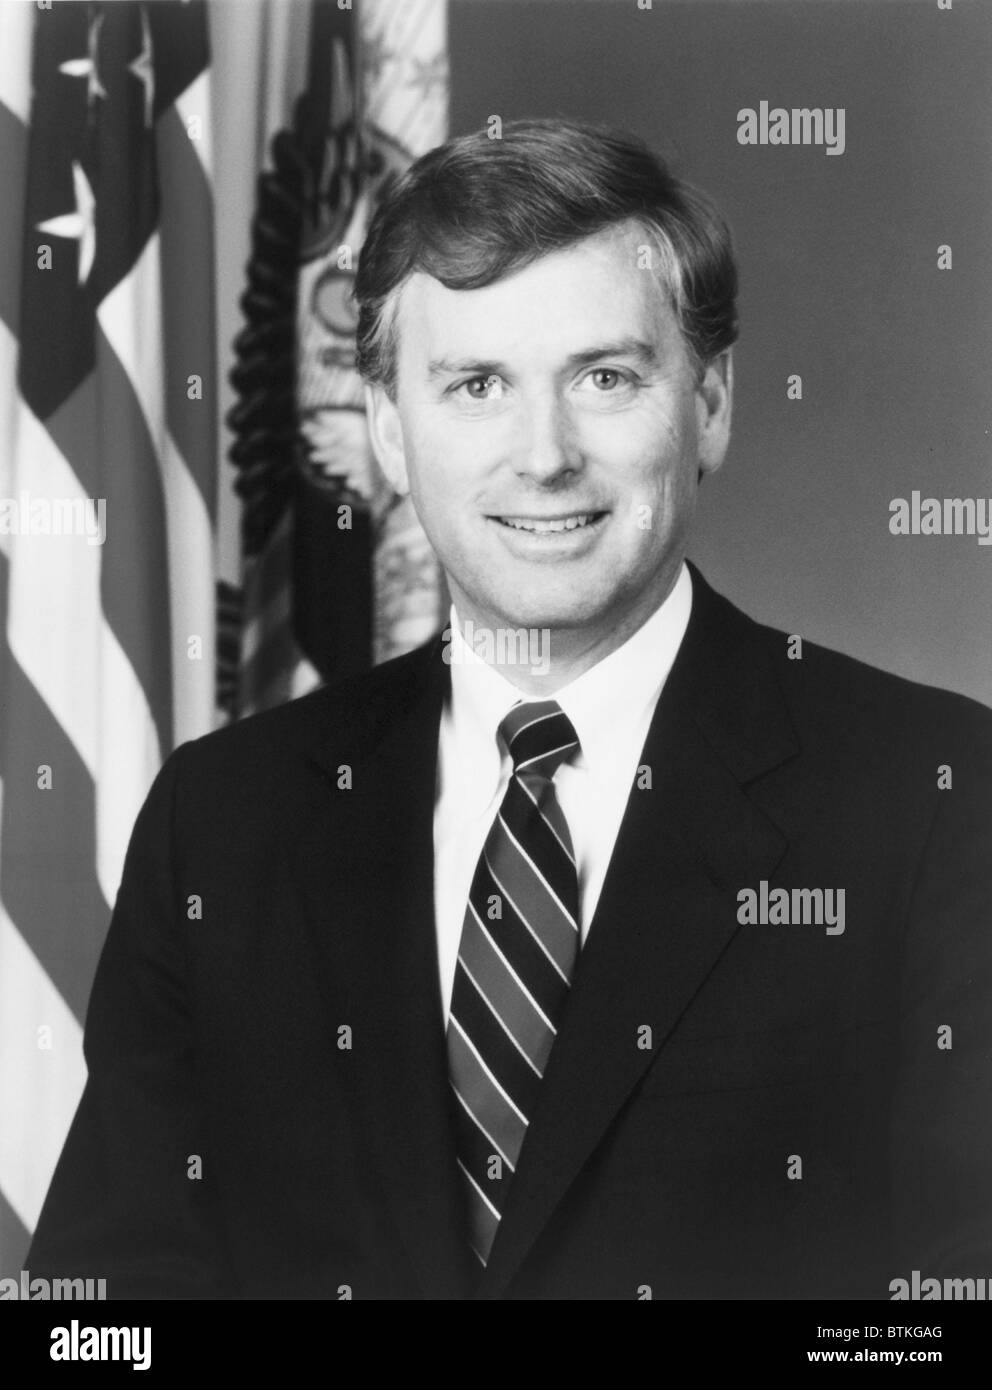 Official Portrait of Vice President Dan Quayle. 1989. Stock Photo